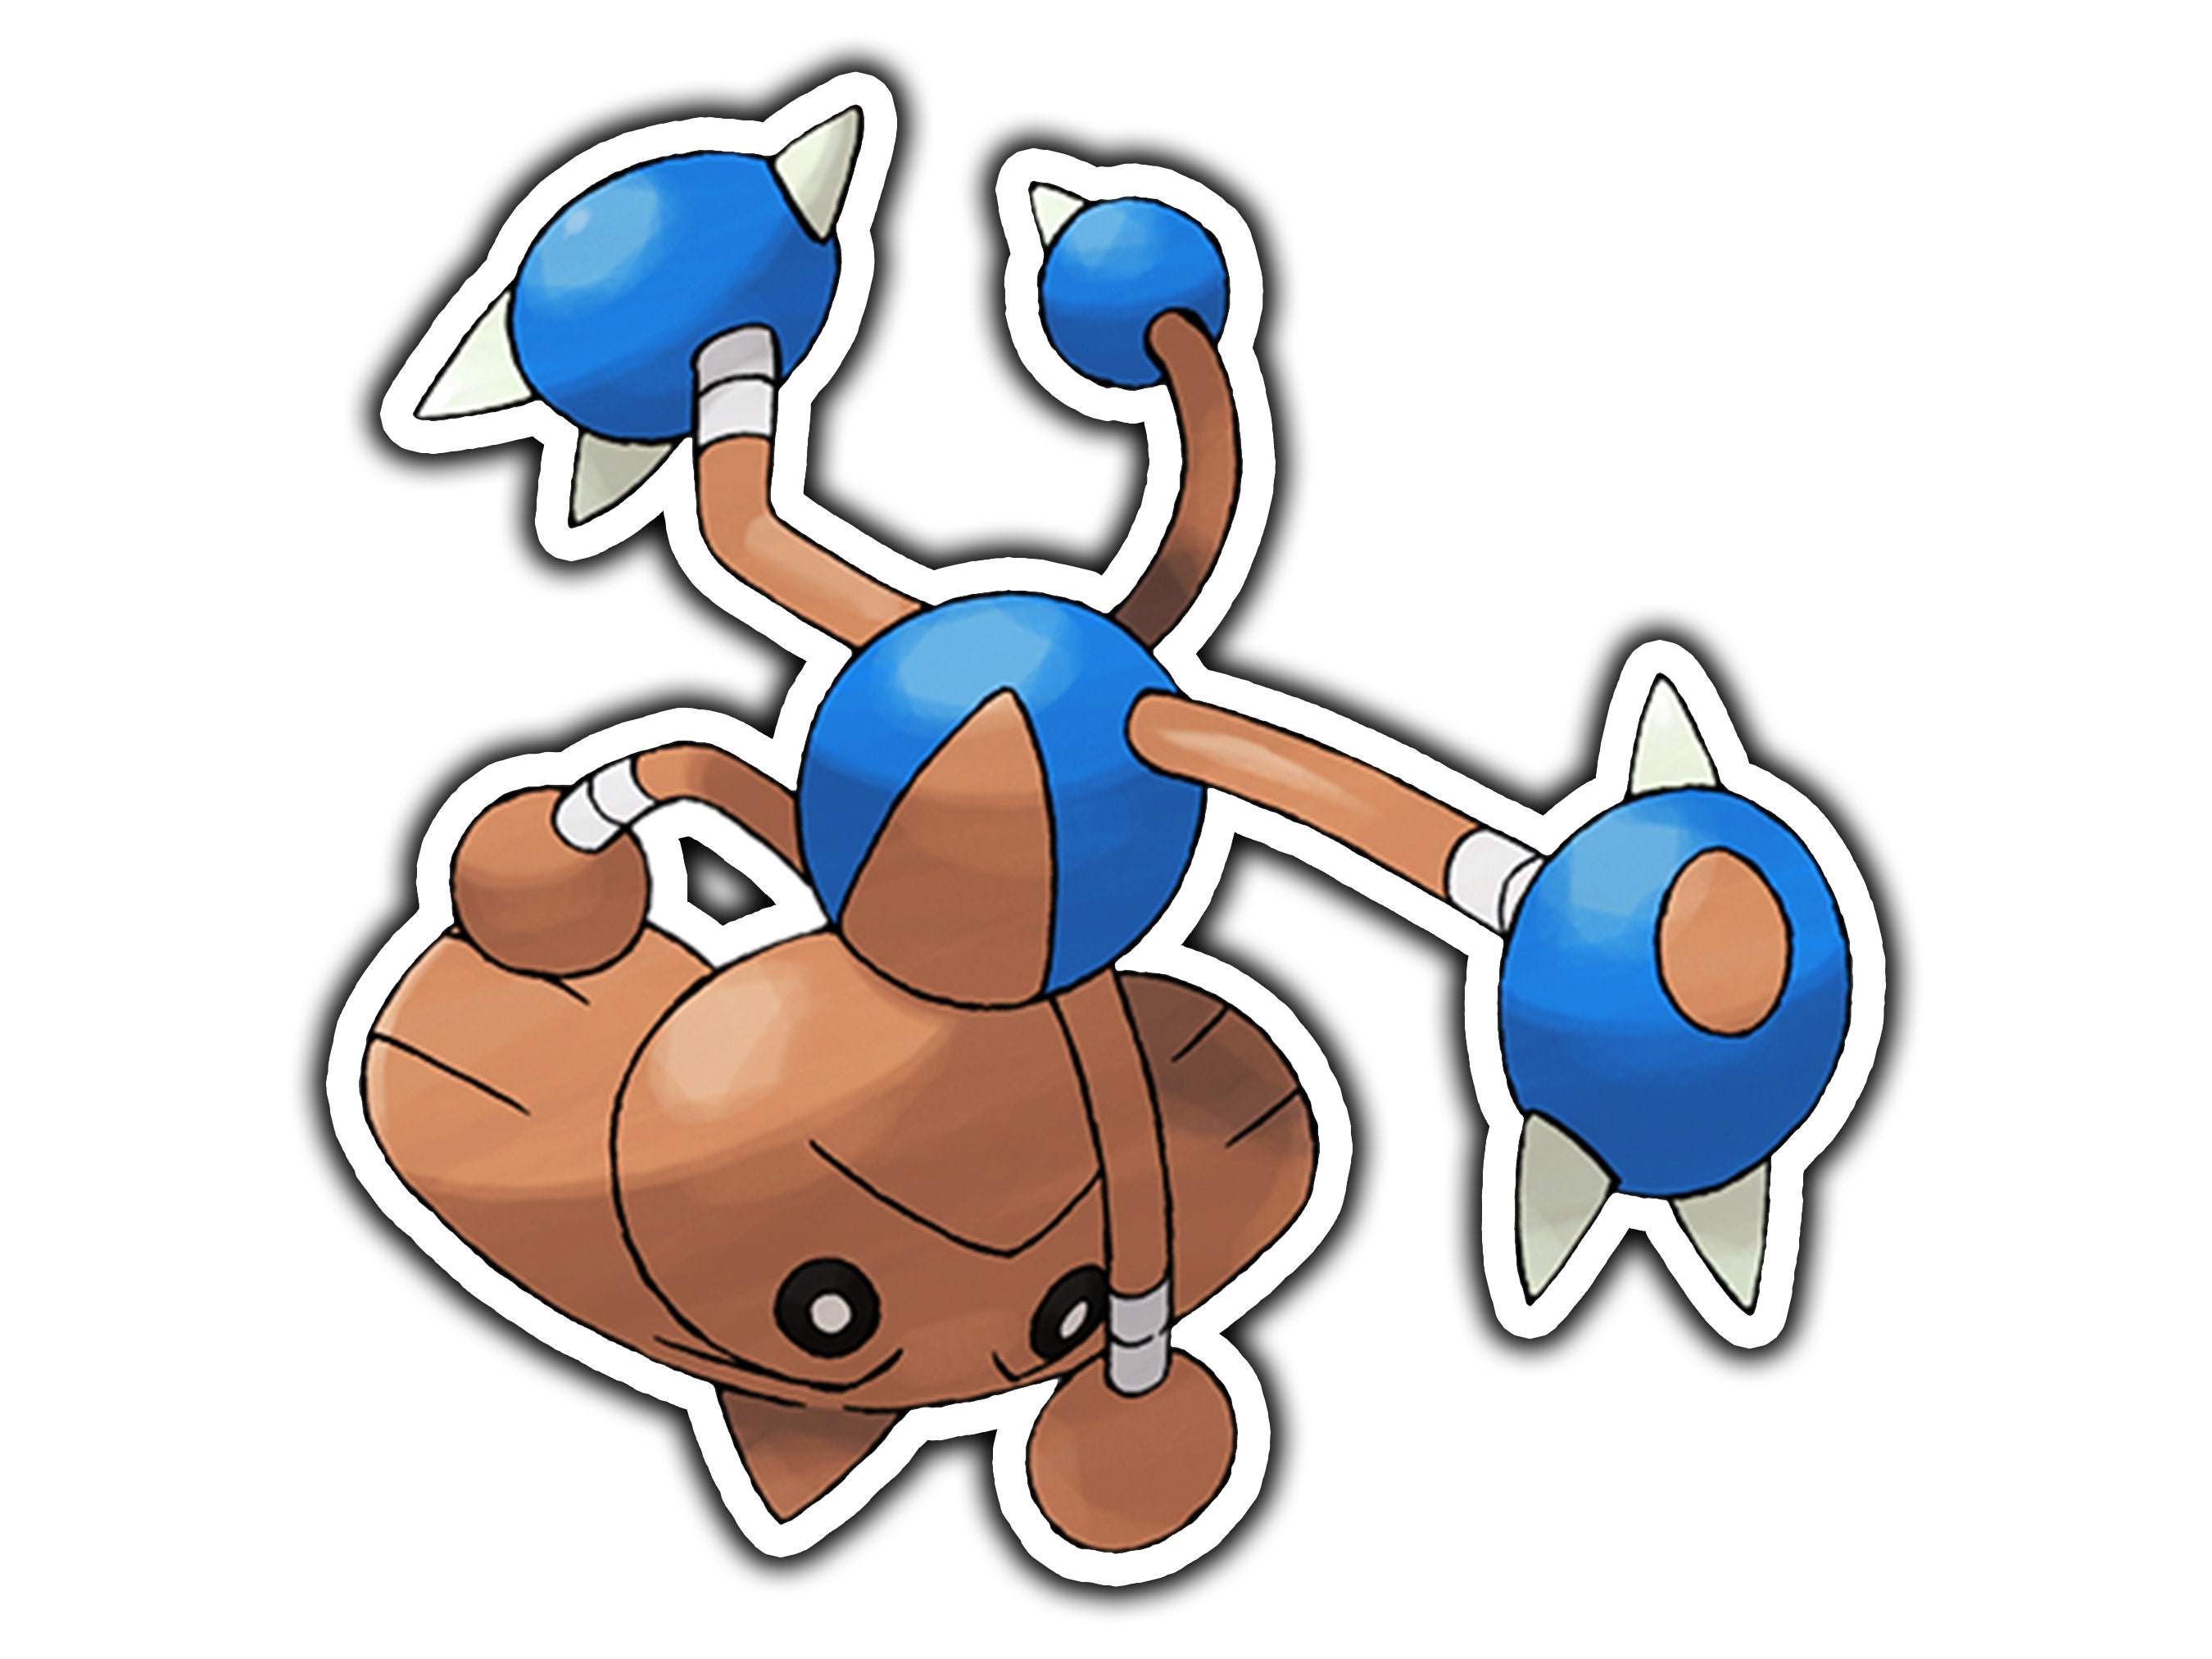 Tyrogue, Hitmonlee, Hitmonchan & Hitmontop Pokémon Pins (4-Pack)